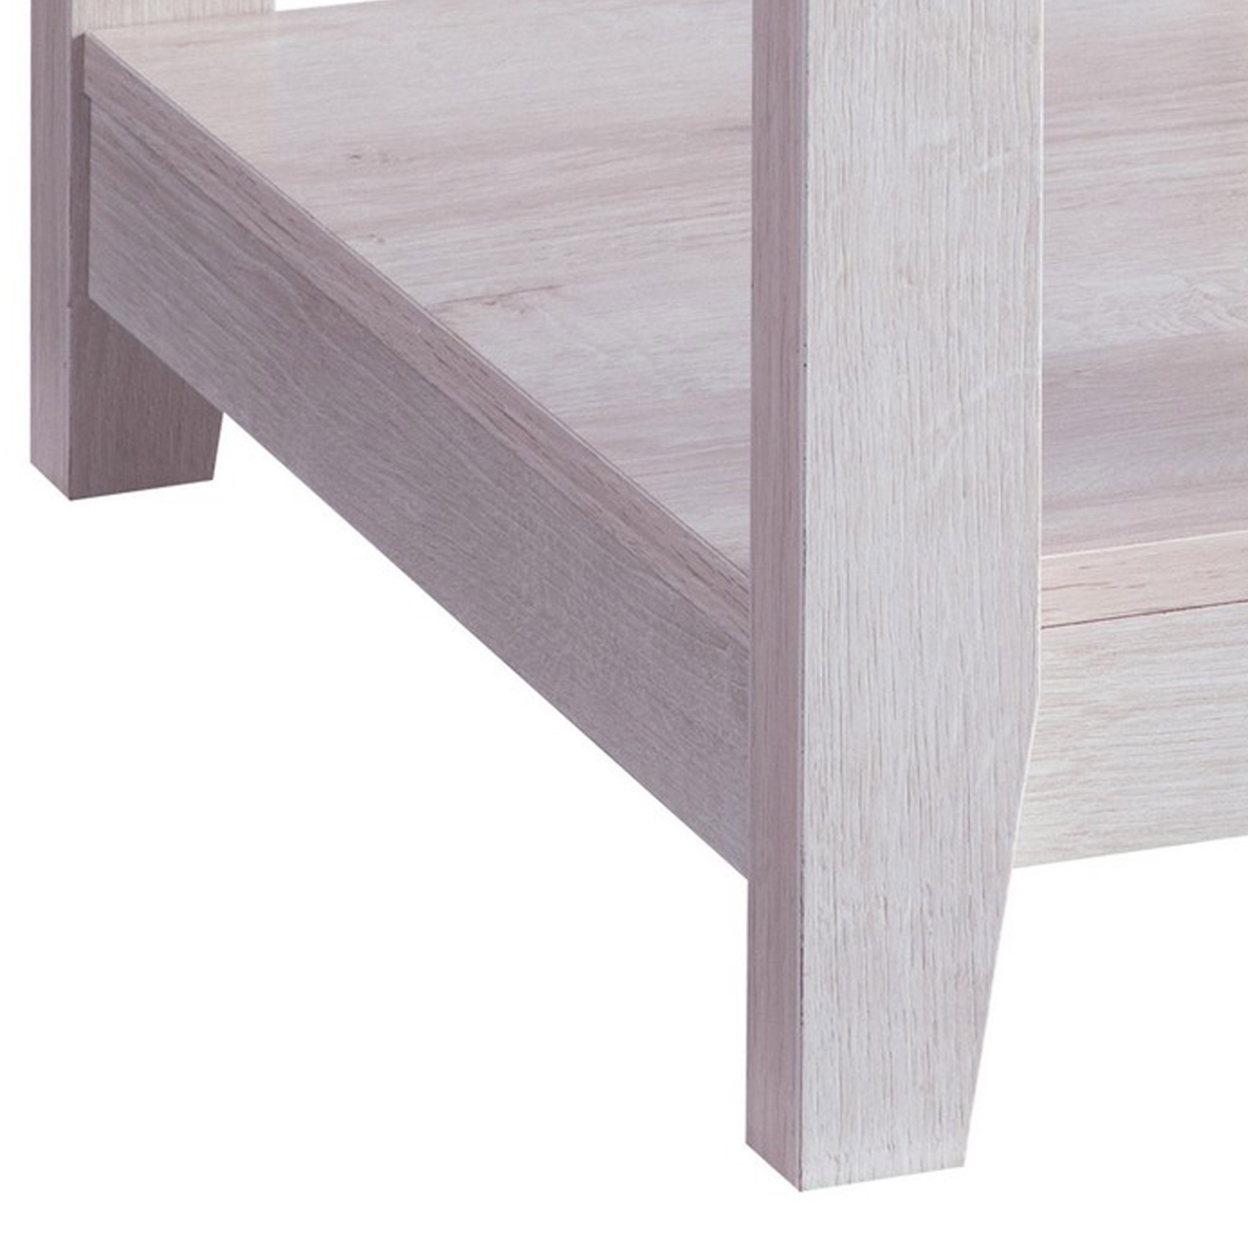 24 Inch Modern Chairside Table With Drawer And Shelf, Block Legs, White- Saltoro Sherpi